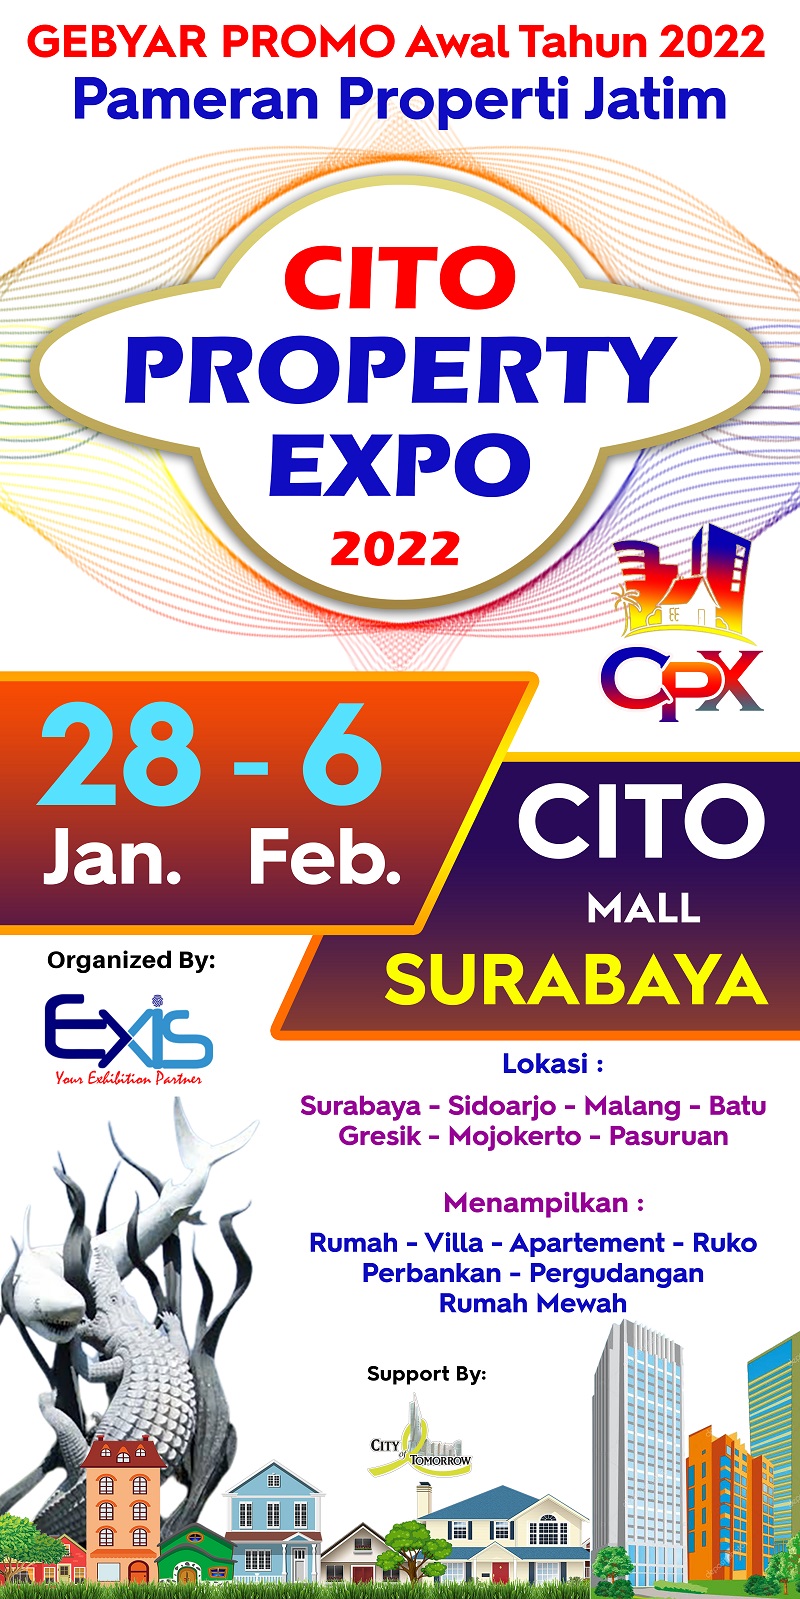 Cito Property Expo 2022 - Pameran Properti Jatim, Pameran Properti Surabaya